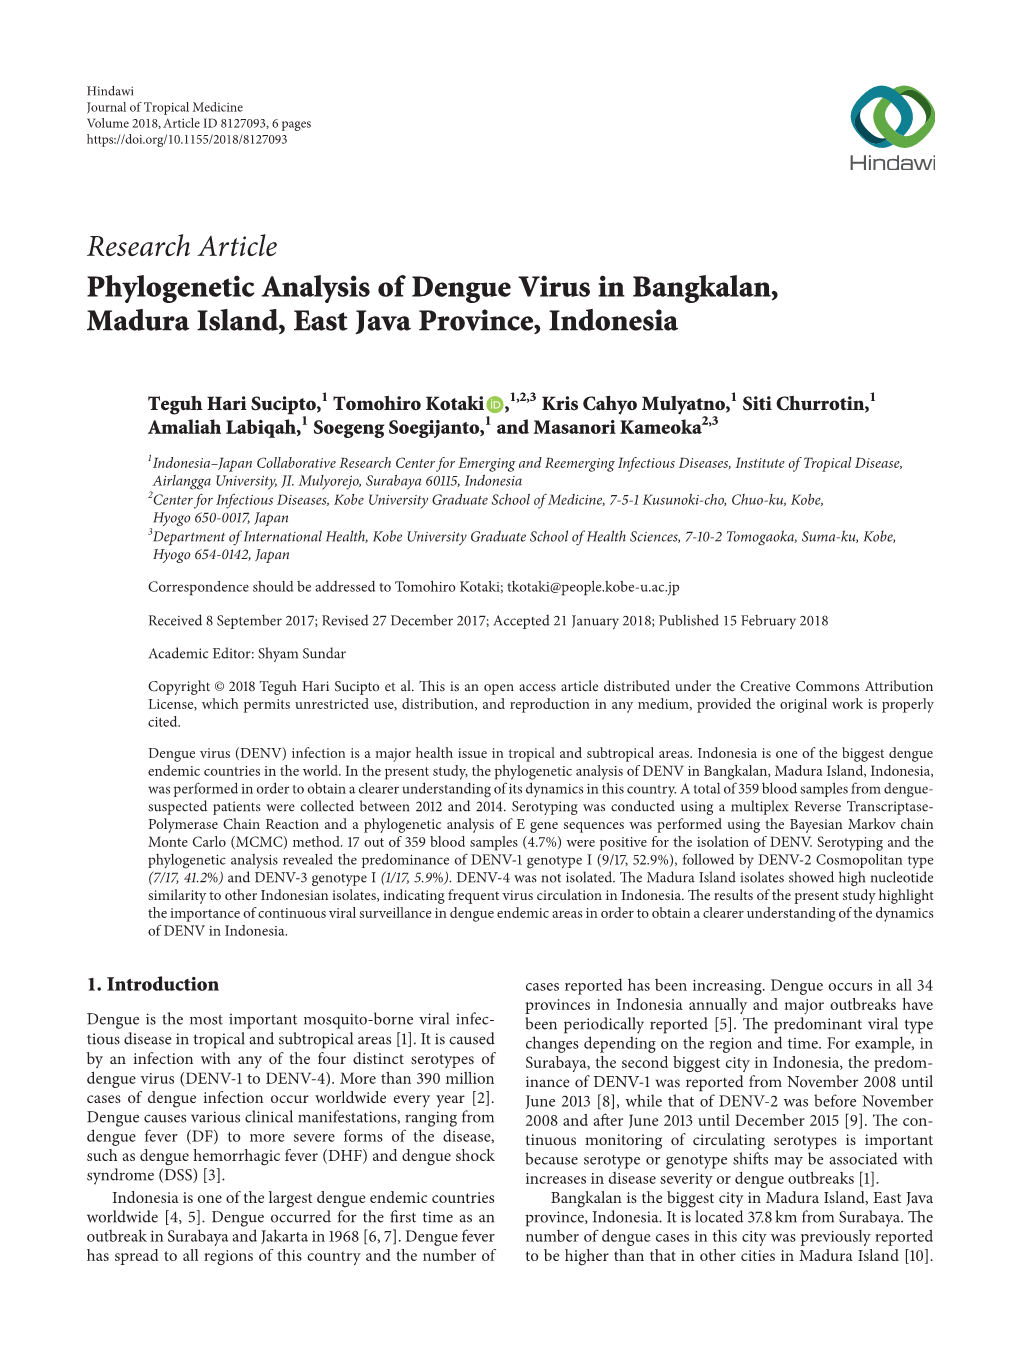 Research Article Phylogenetic Analysis of Dengue Virus in Bangkalan, Madura Island, East Java Province, Indonesia